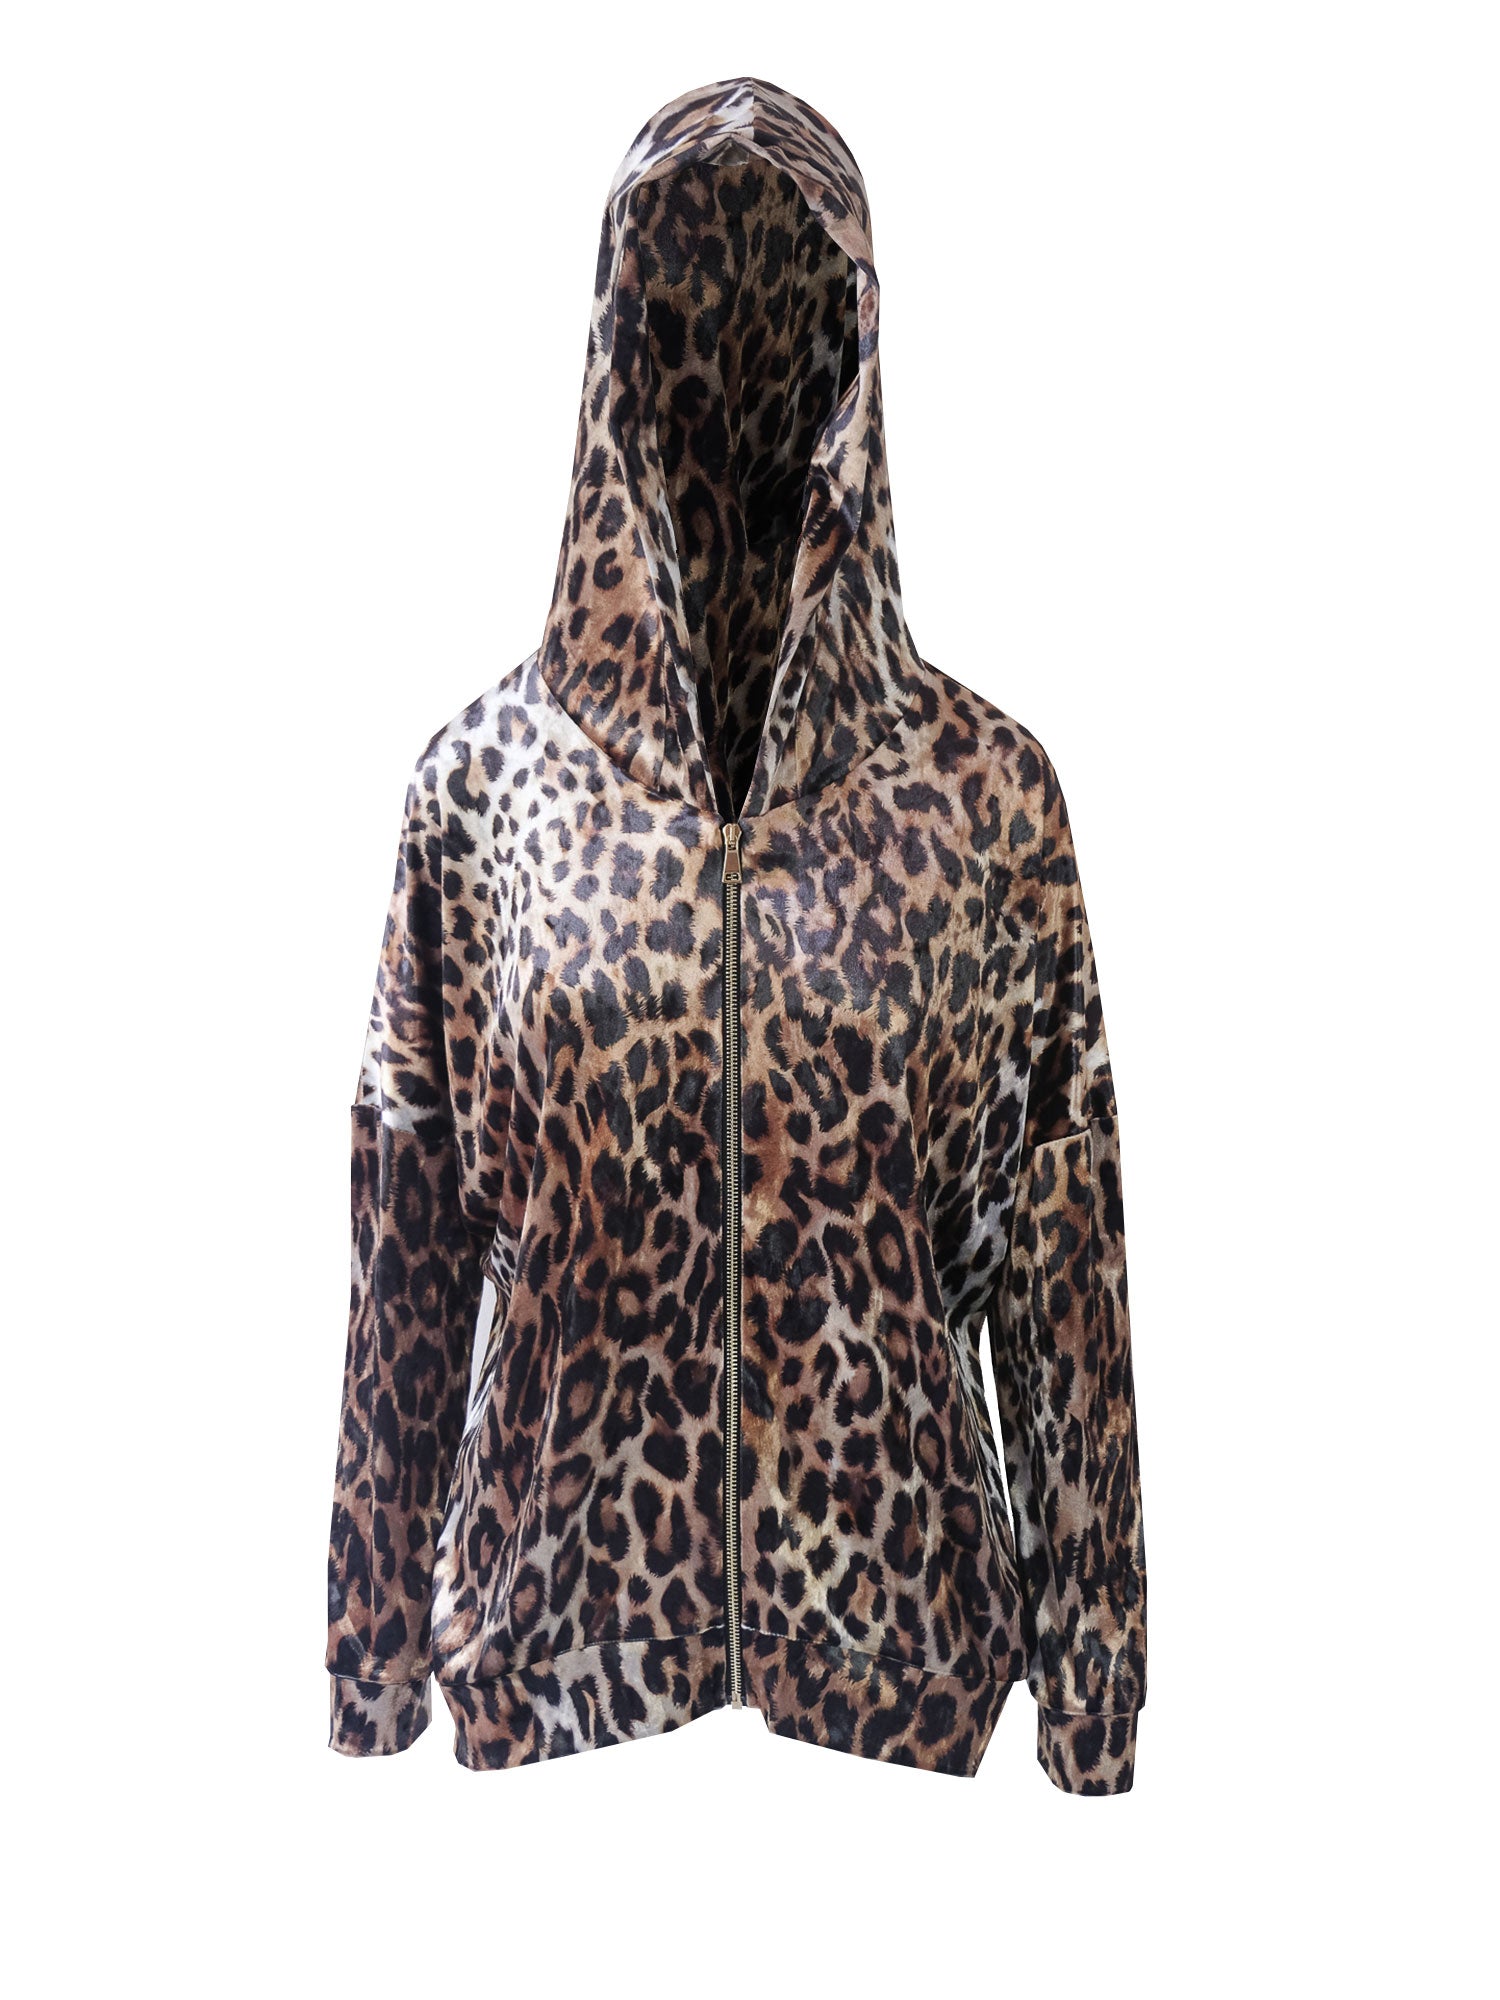 ADRIEN - hoodie with zip in animalier hammered chenille